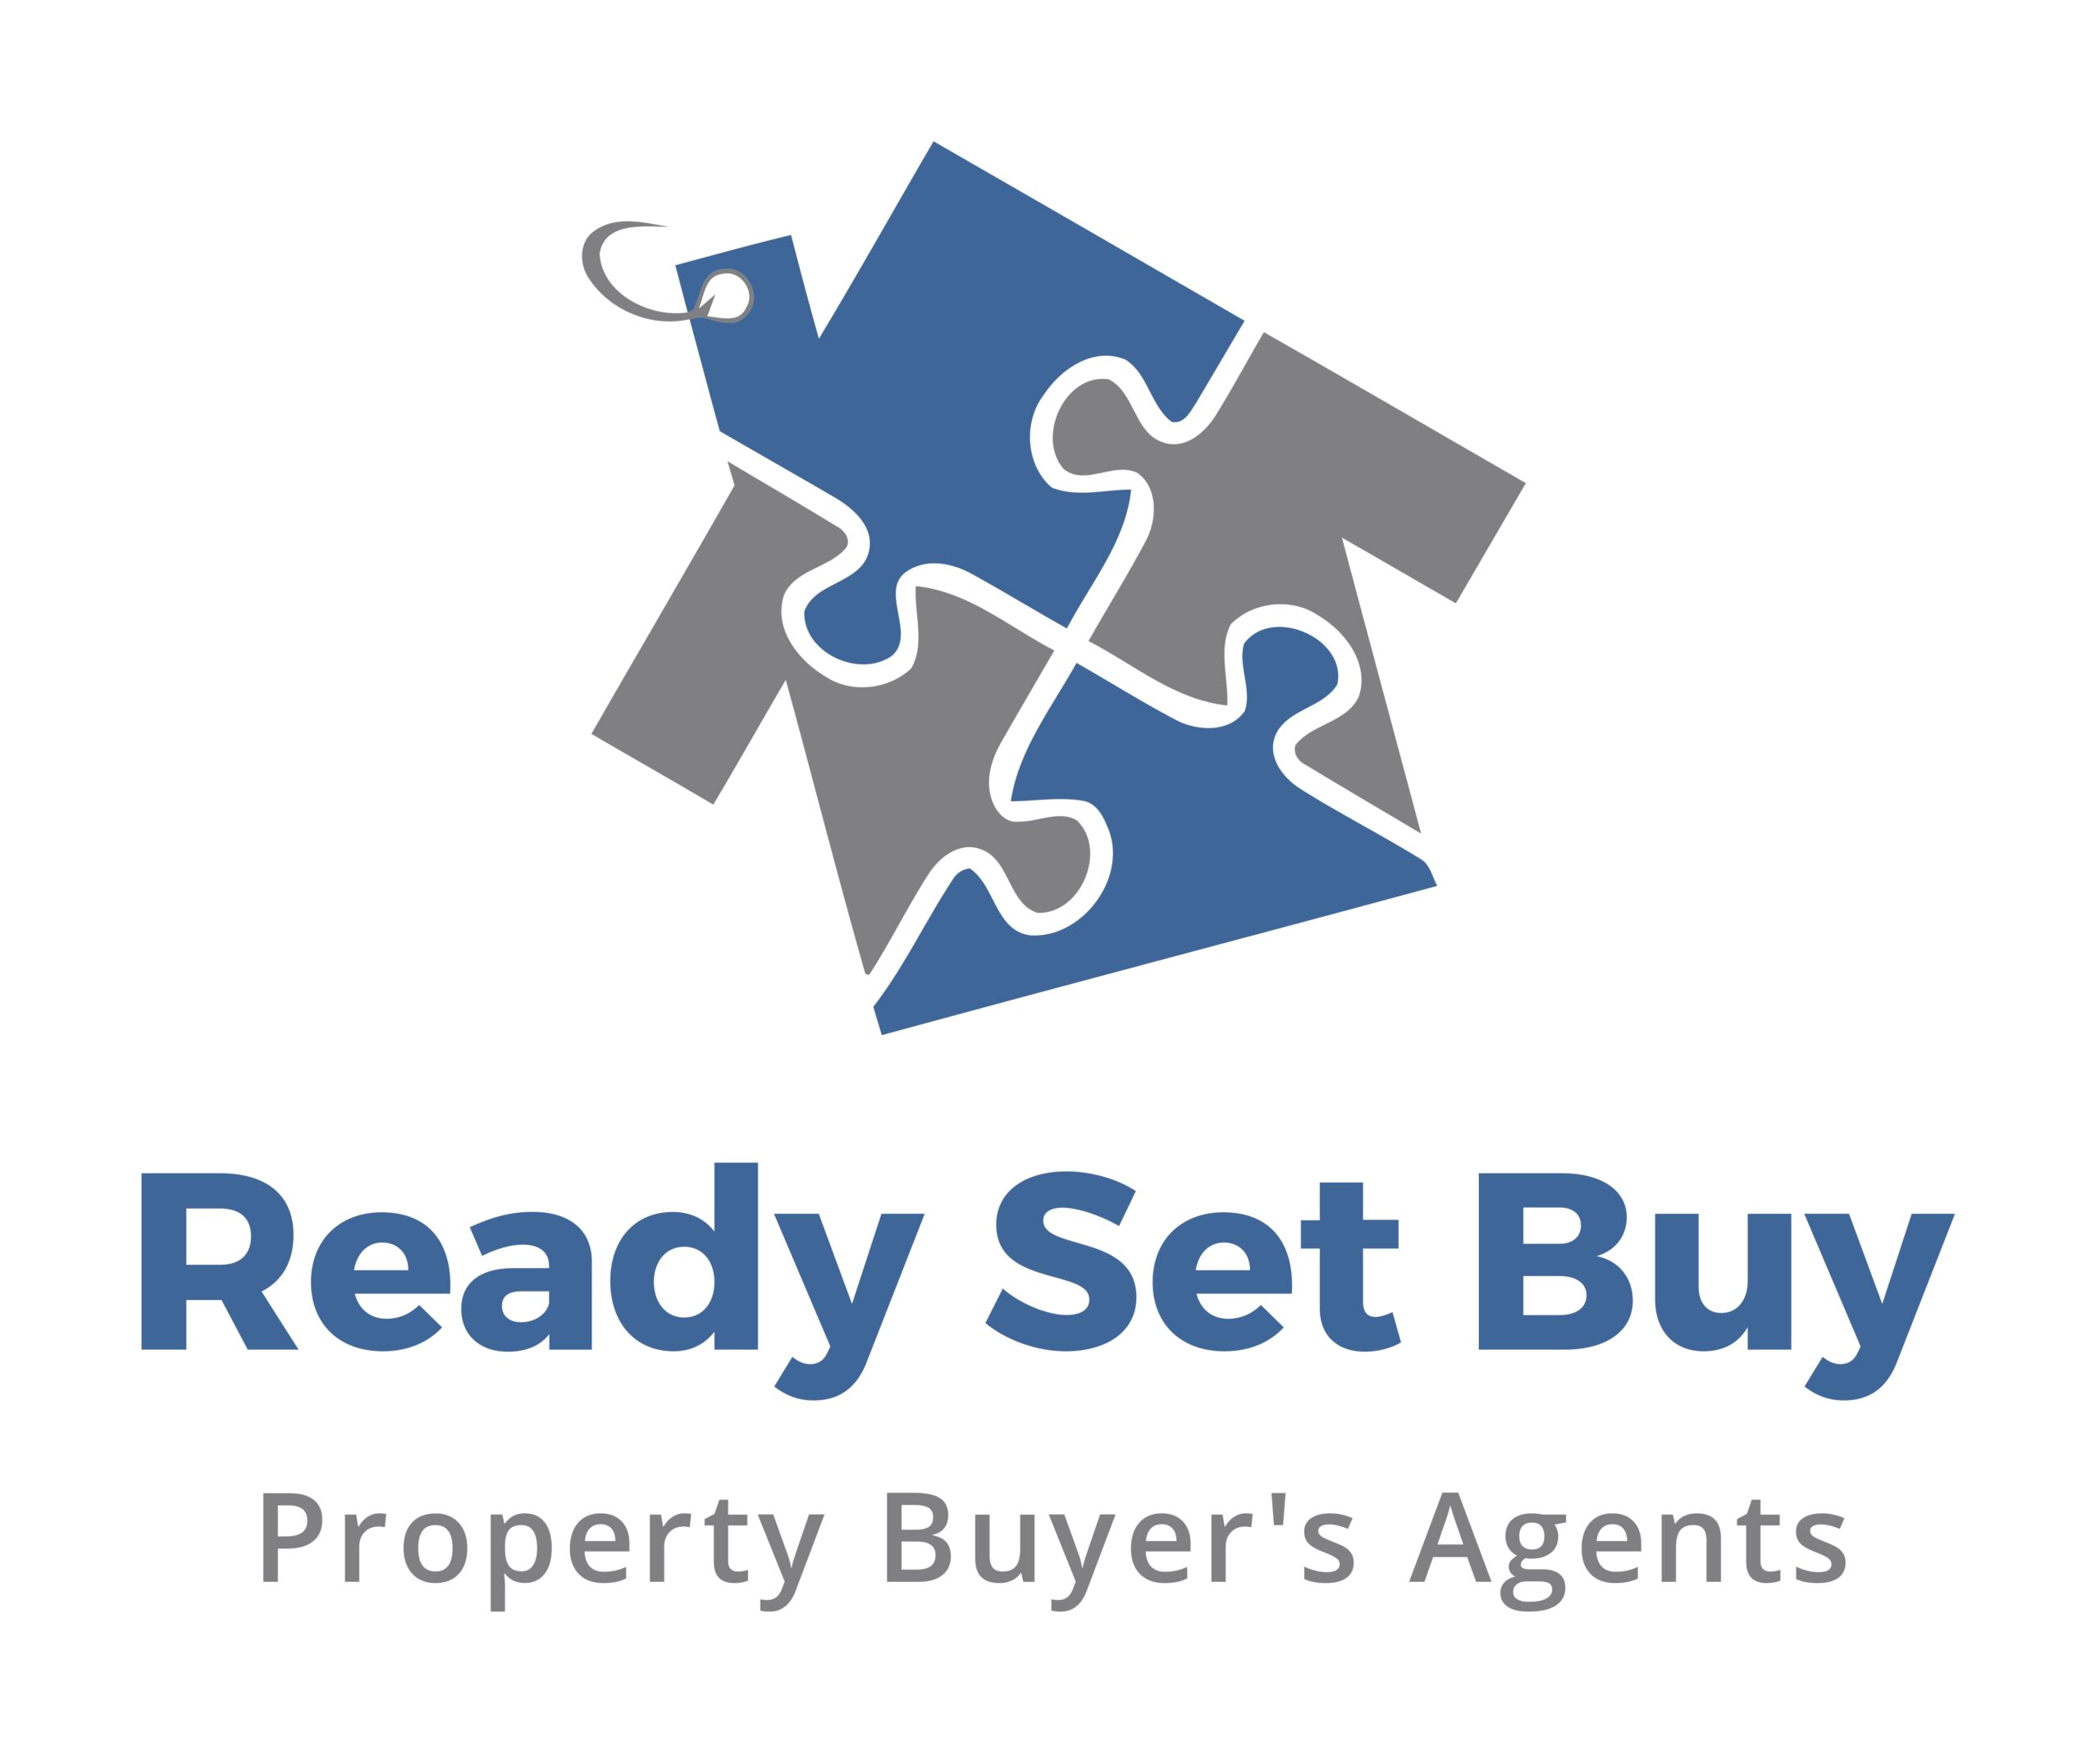 Ready Set Buy – Property Buyer’s Agents